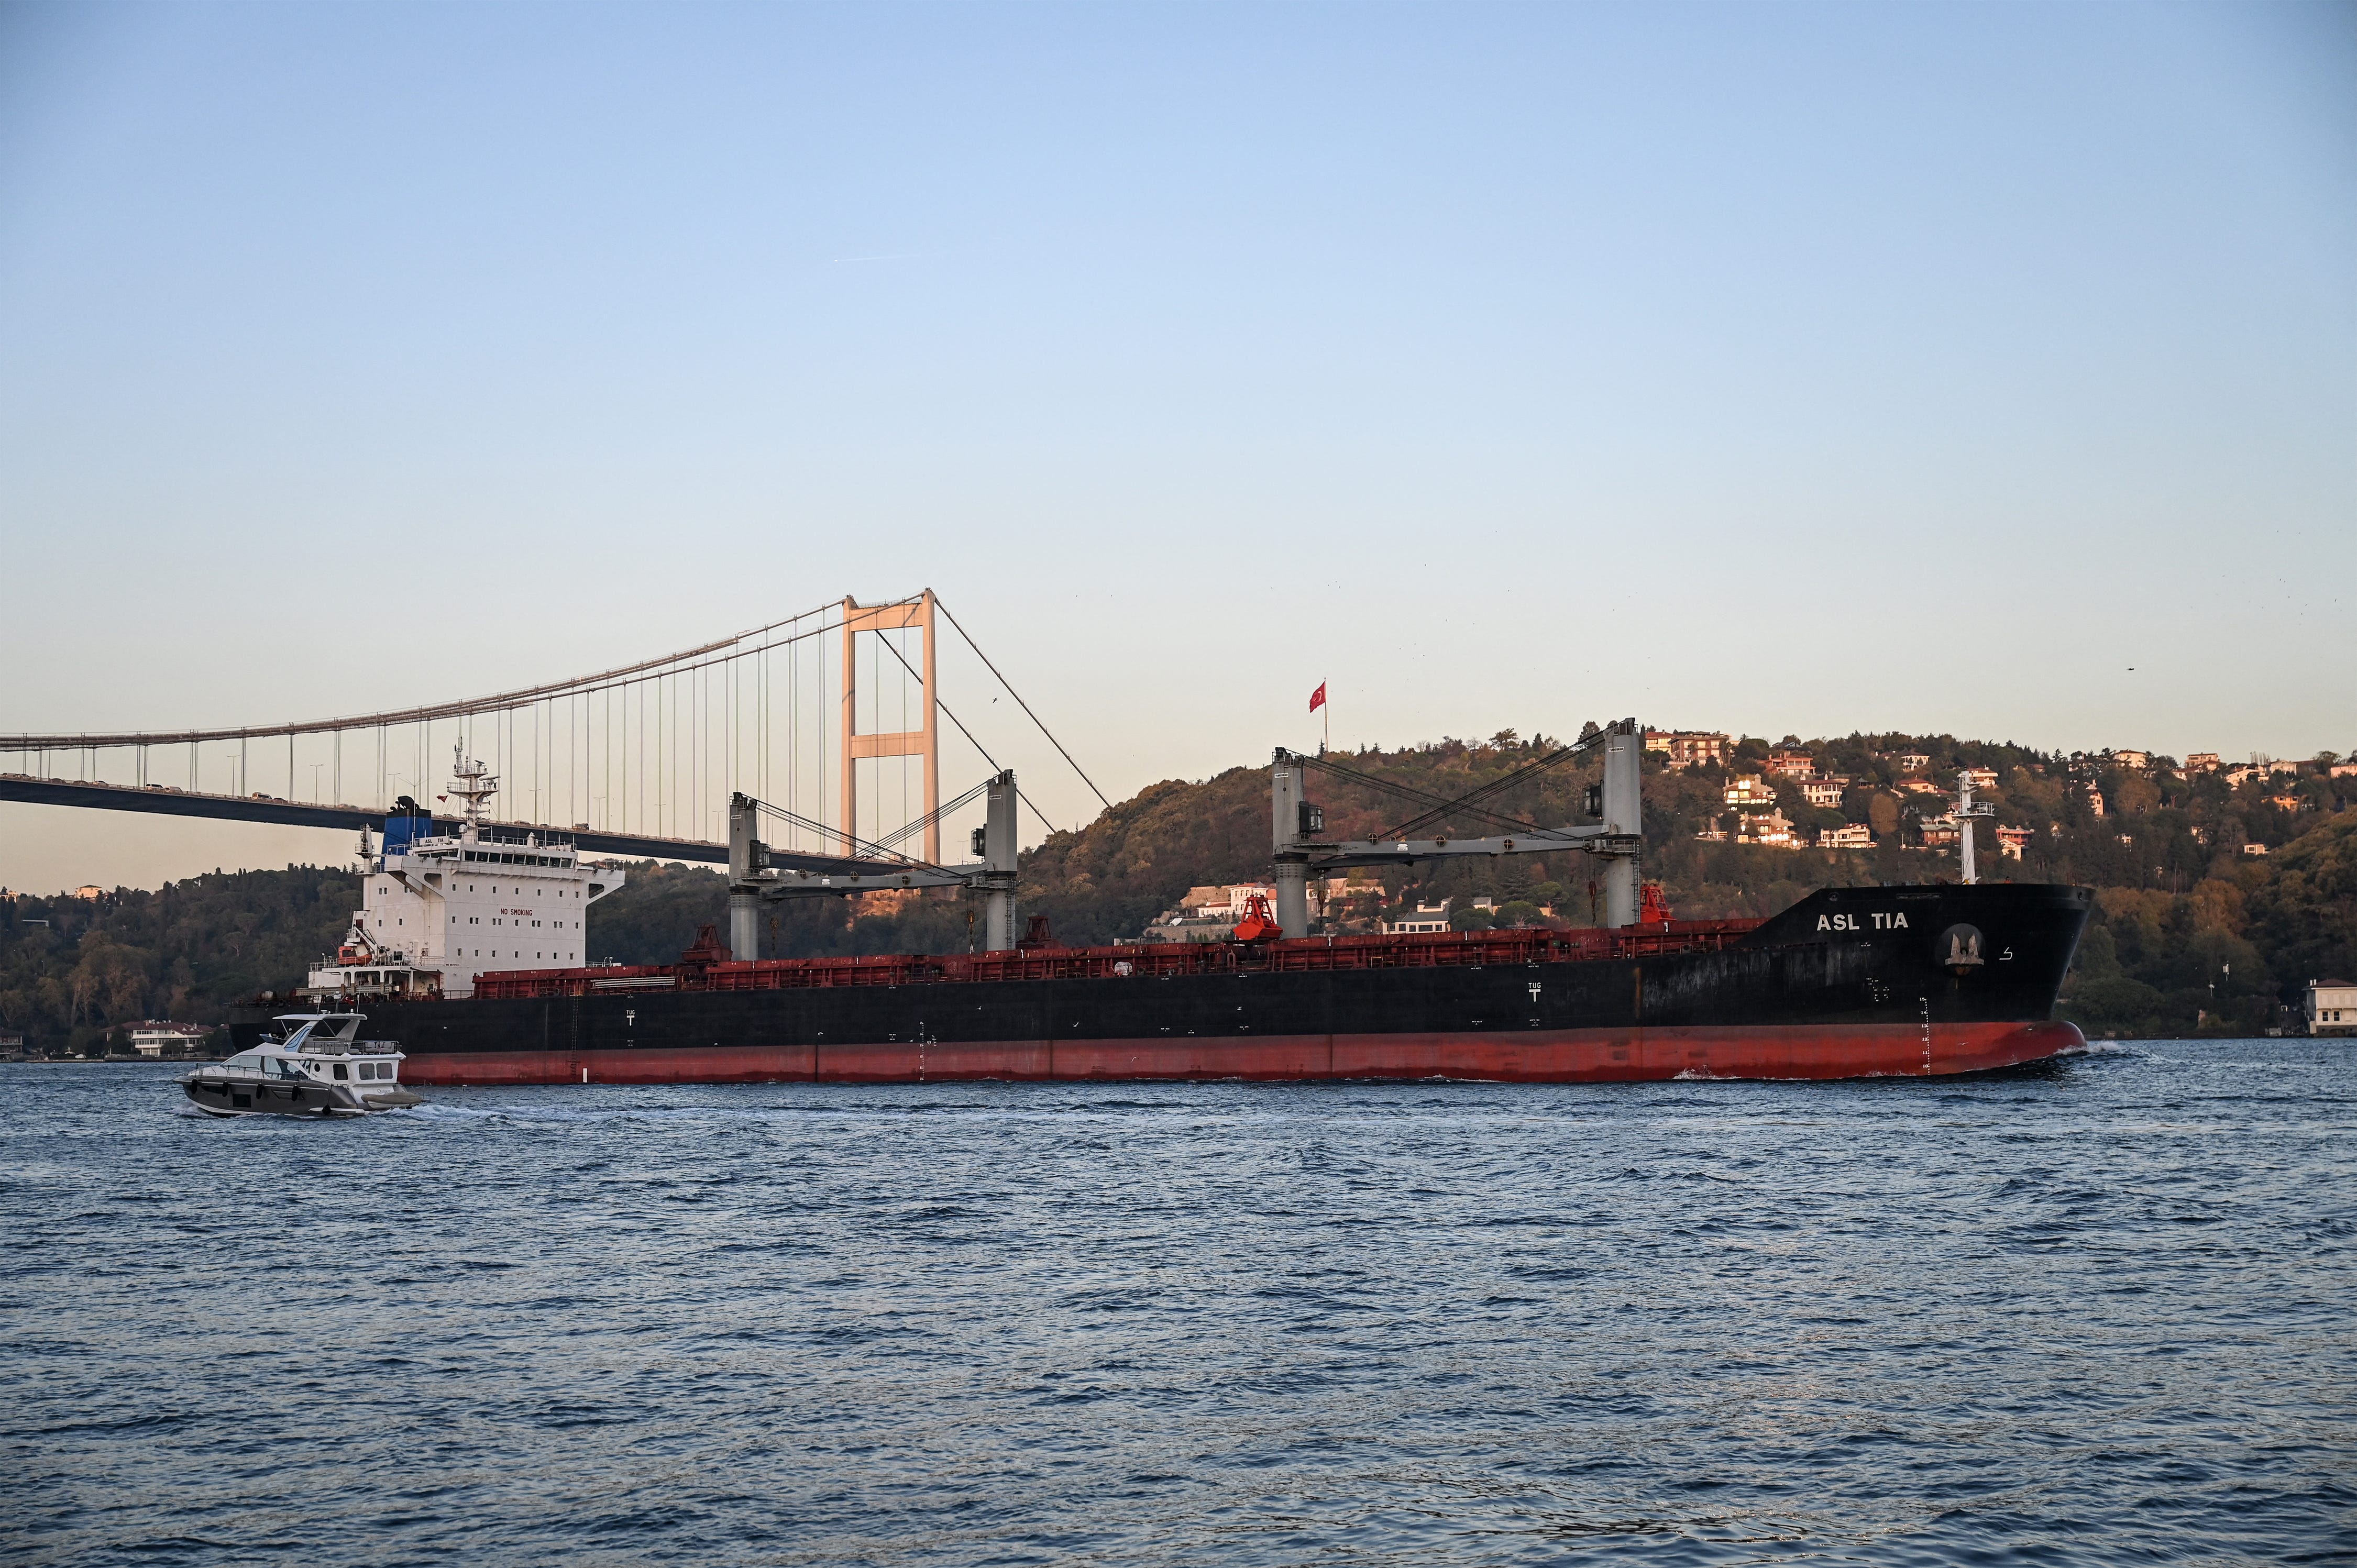 Asl Tia, a cargo vessel carrying Ukrainian grain, sails under Fatih Mehmet Sultan bridge on Bosphorus to Marmara sea, in Istanbul, on Nov. 2, 2022.